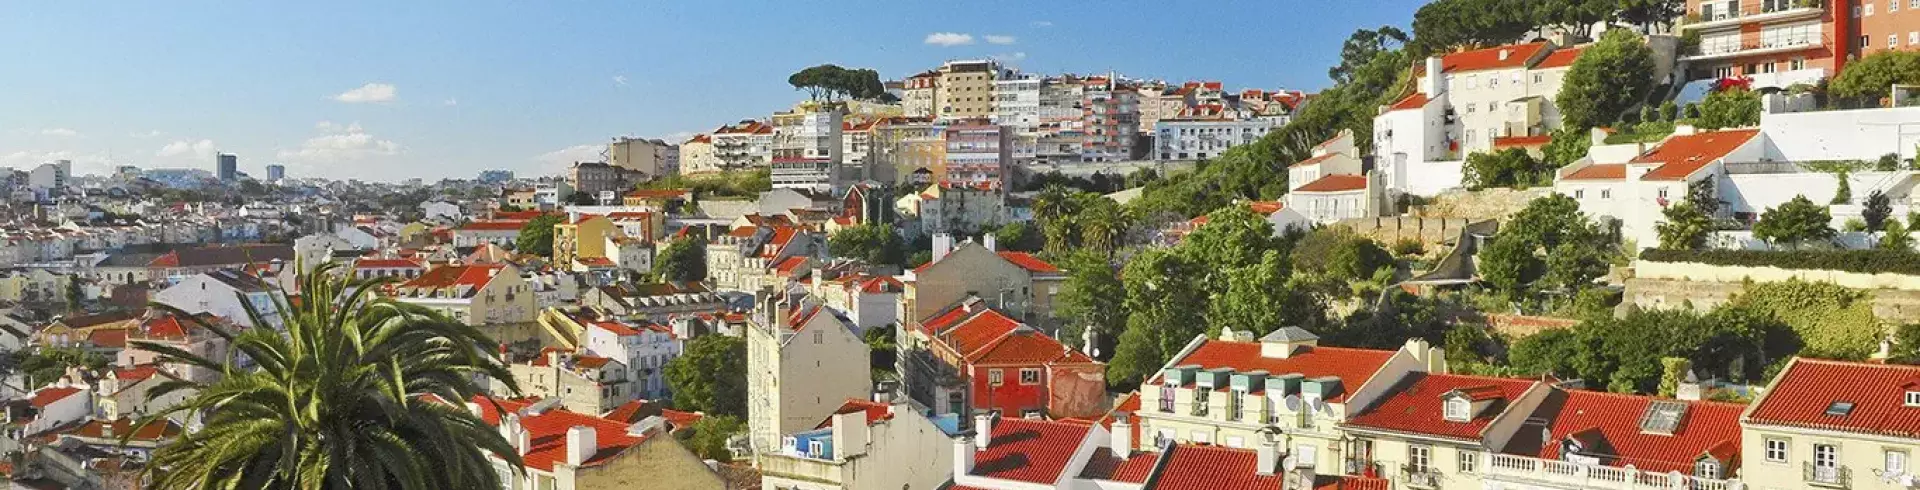 Portugalska Odyseja